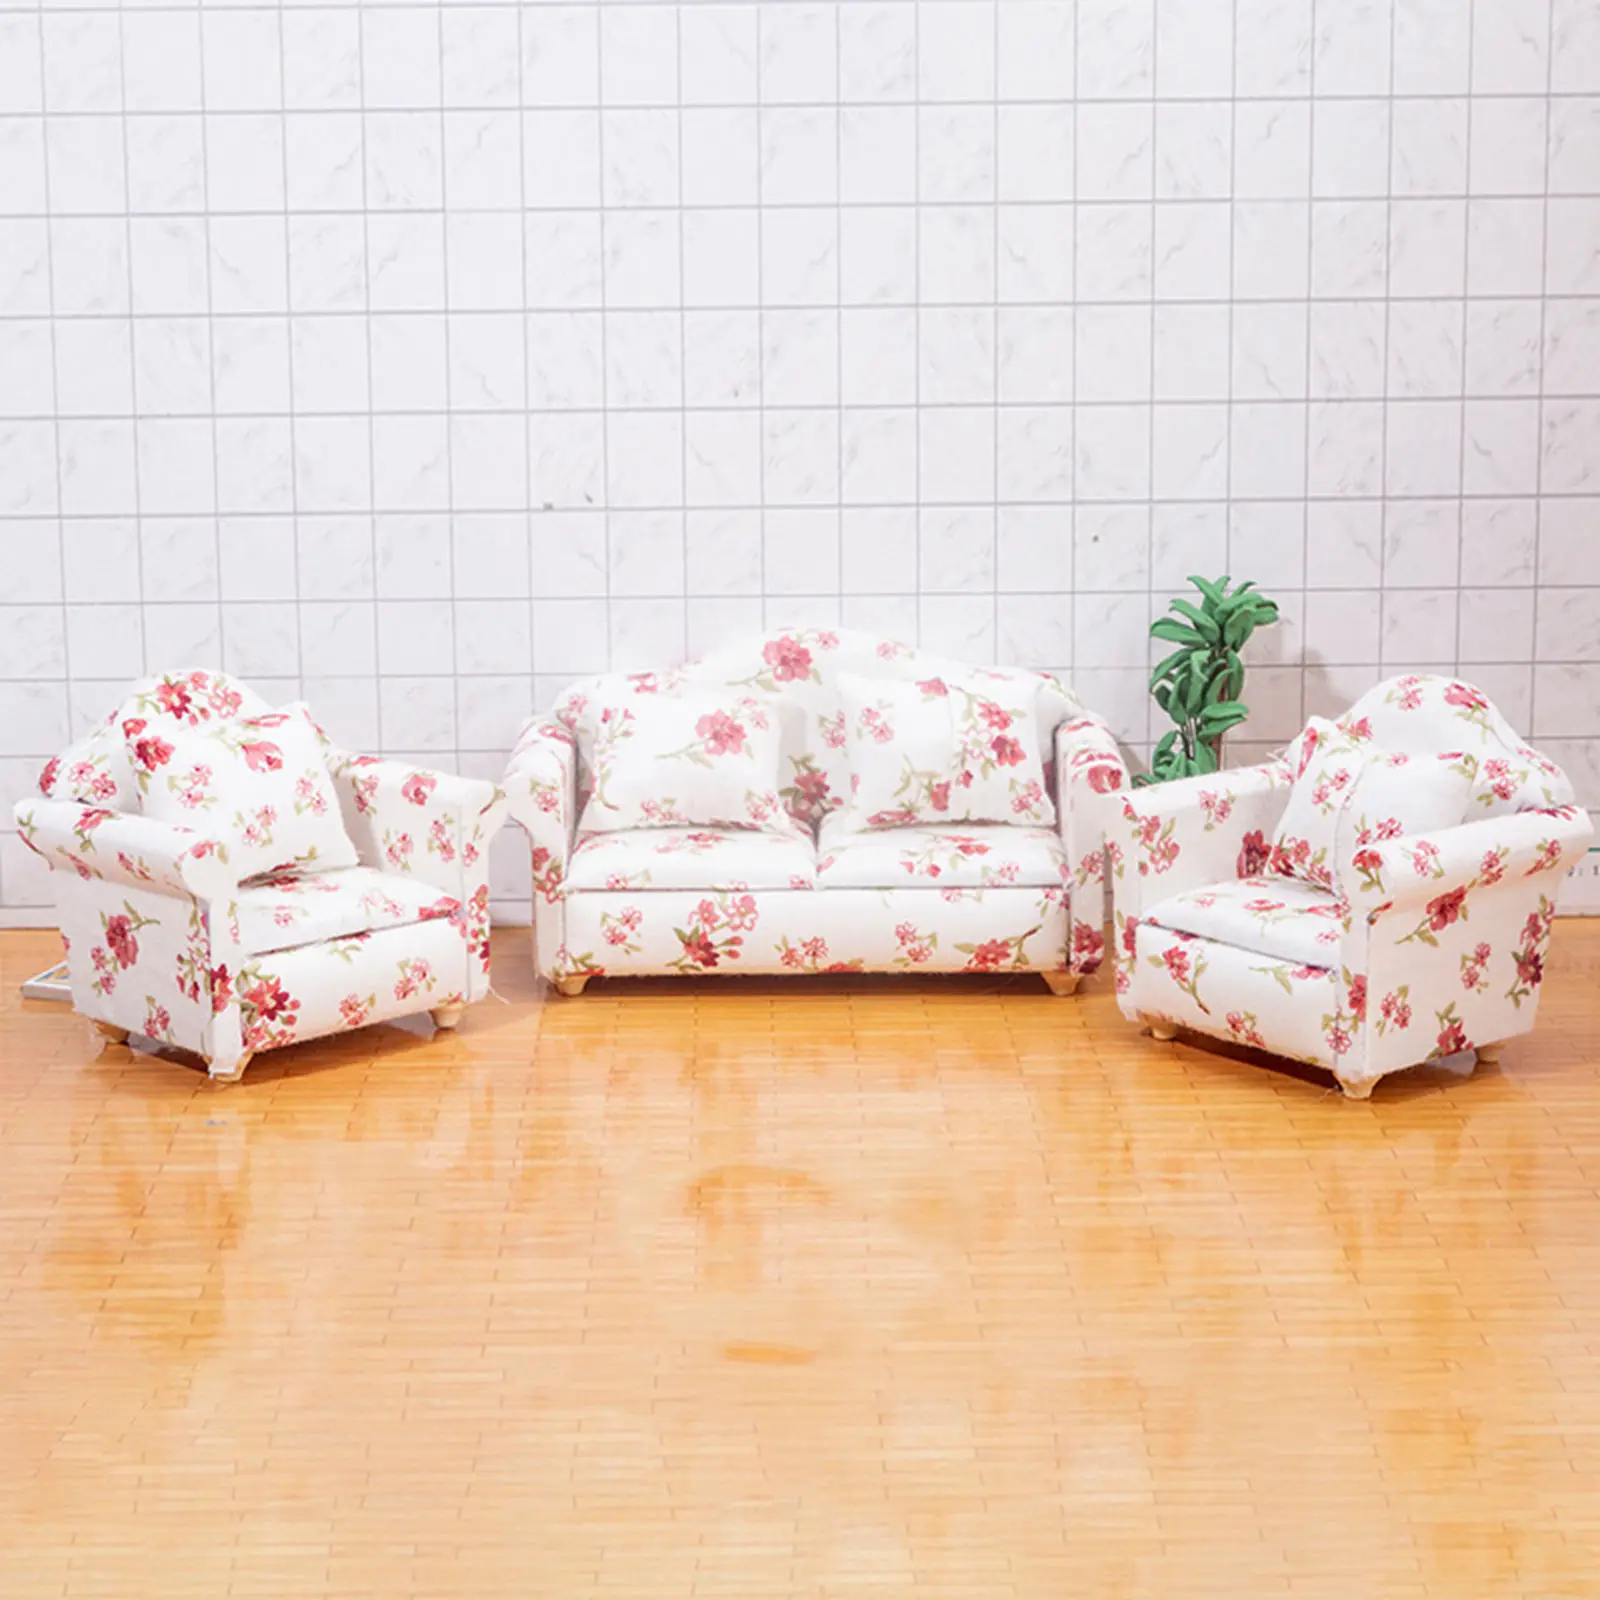 1:12 Dollhouse Sofa Accessories Cushions Mini Chair Miniature Furniture for Living Room Kids Toys